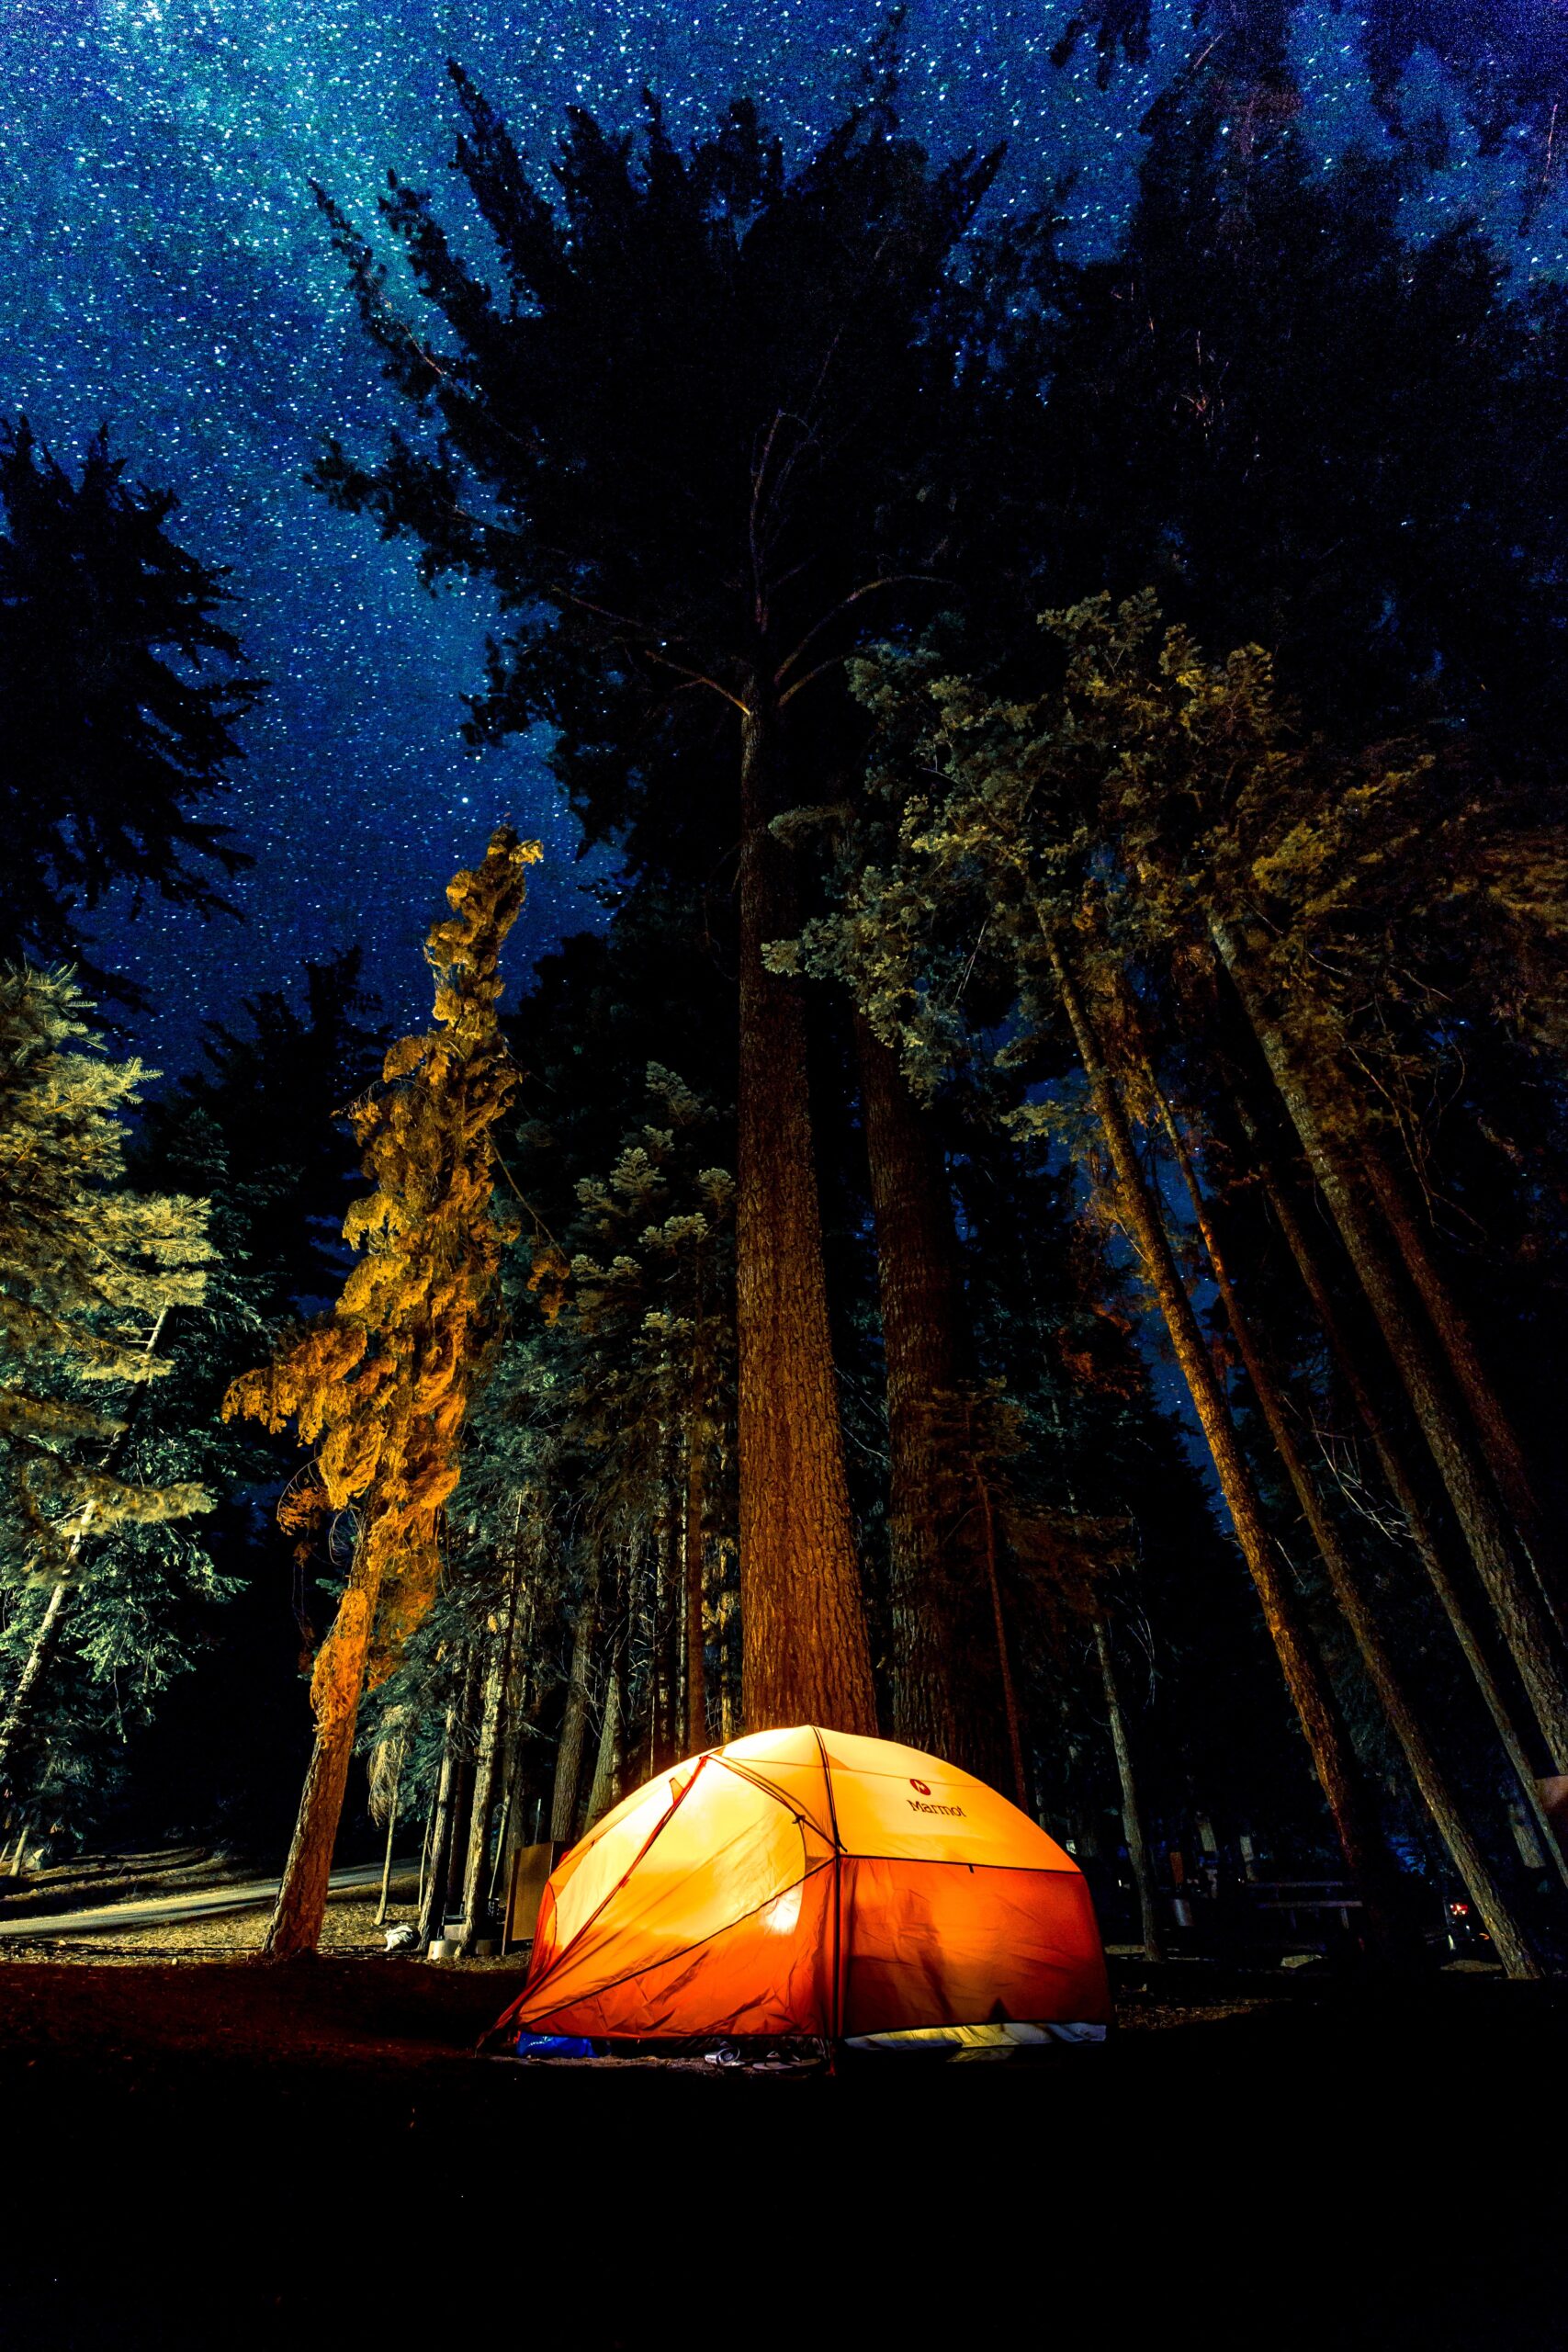 Lit up tent, starry night